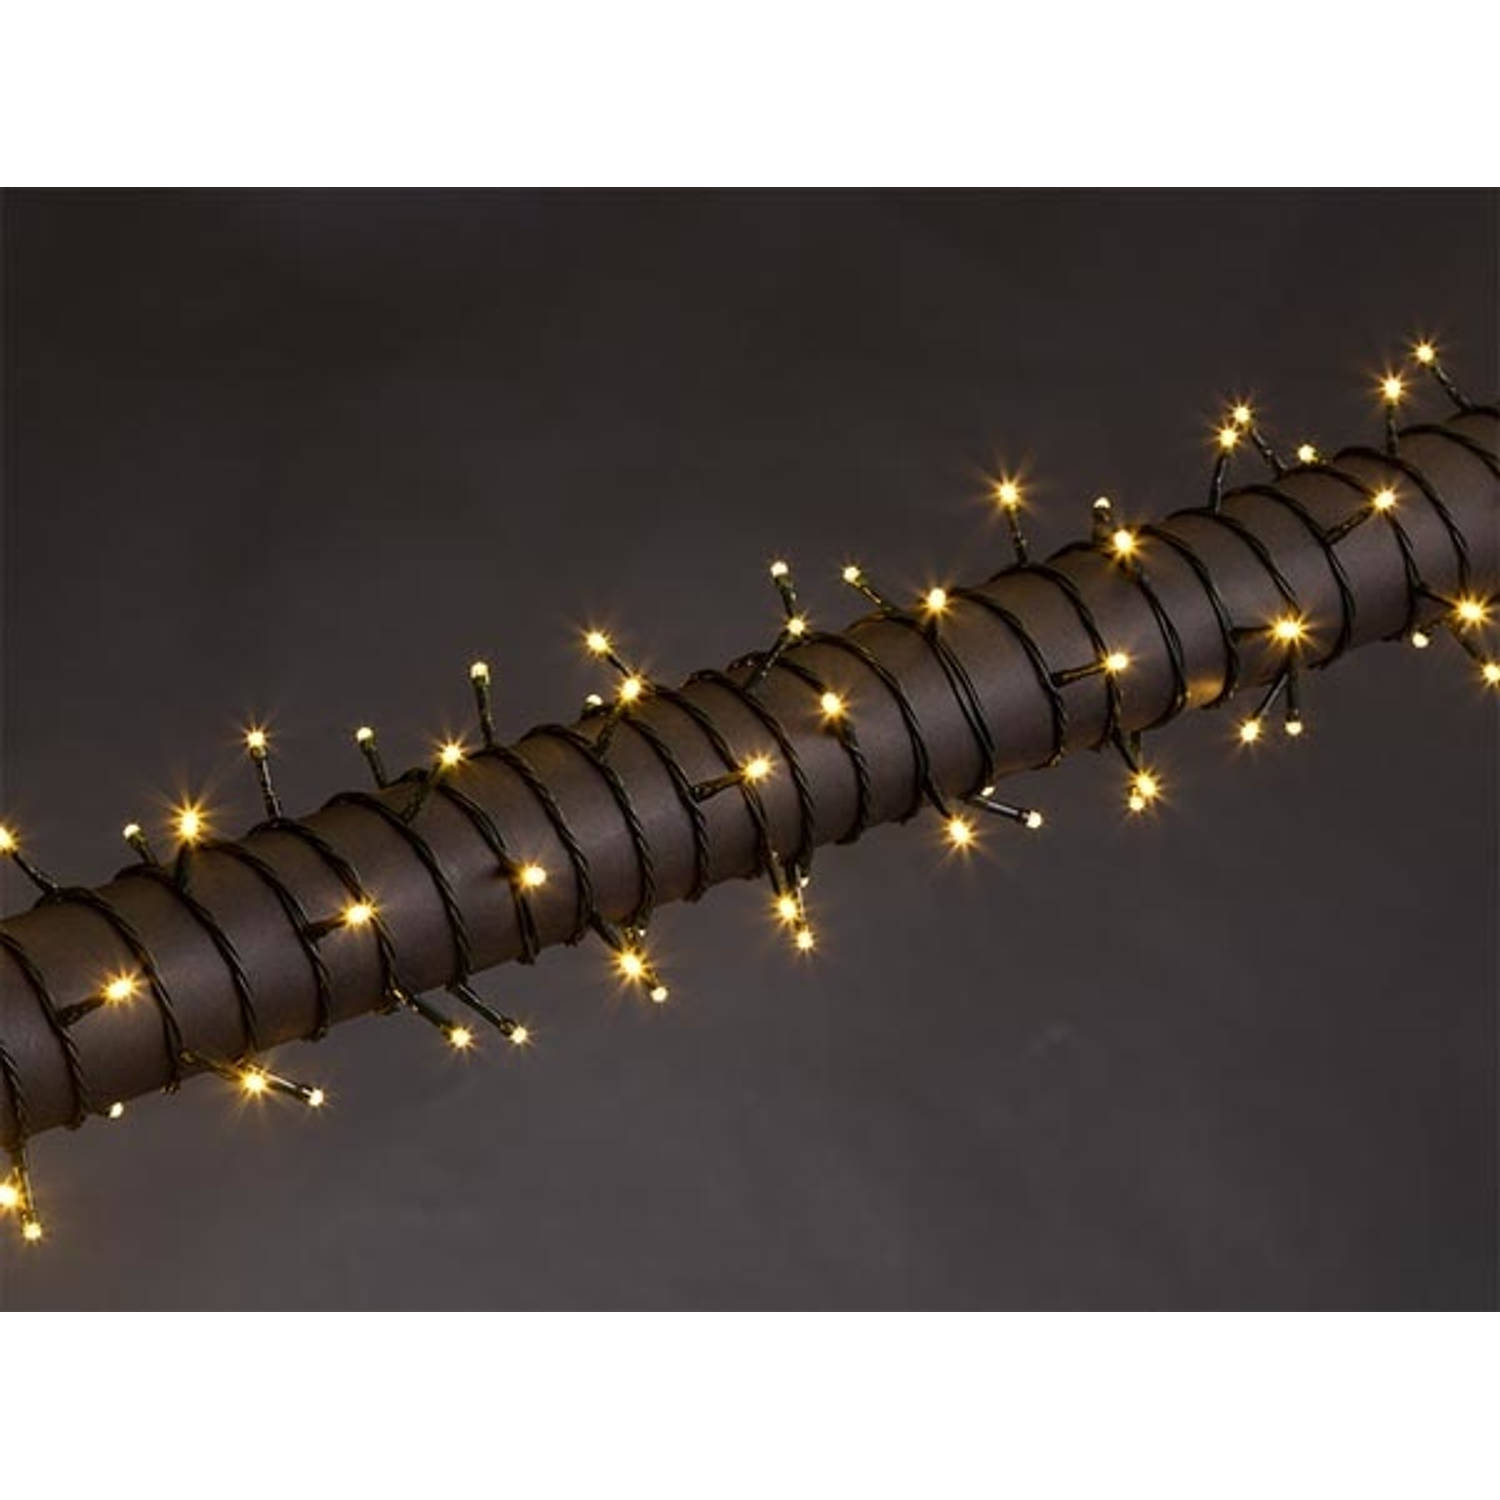 Vellight Kerstverlichting - 20m - 300 LED's – Warm wit – Binnen & Buiten